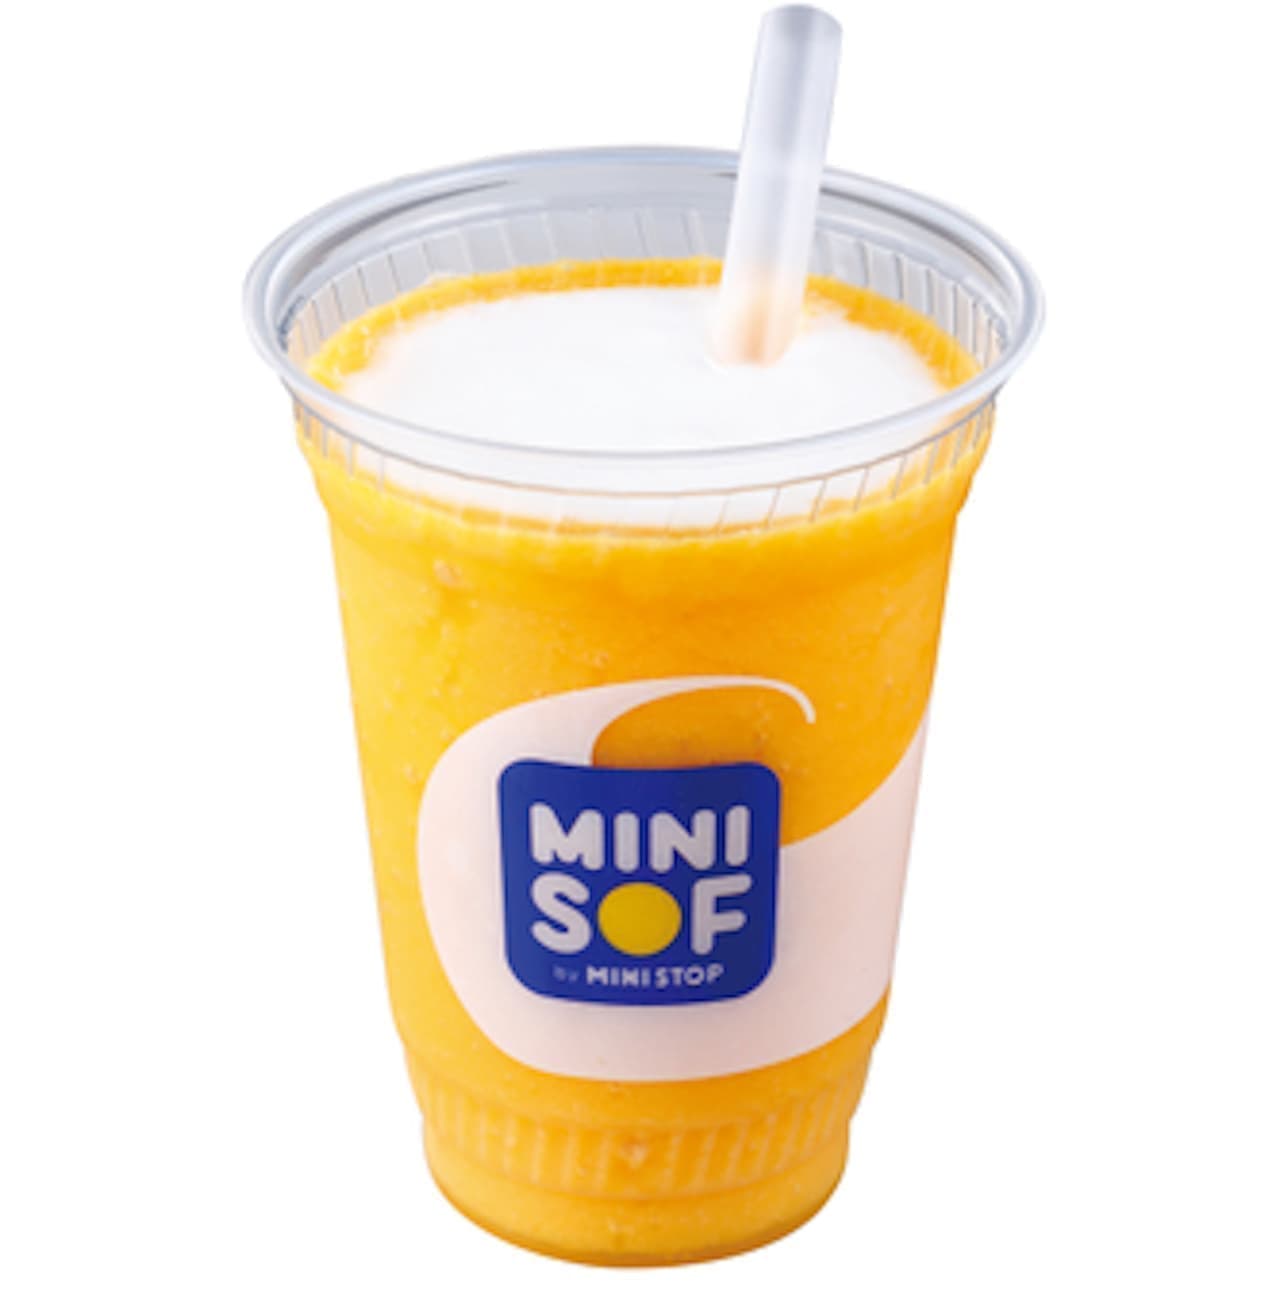 MINI SOF "Fruit Juice Orange & Yogurt"